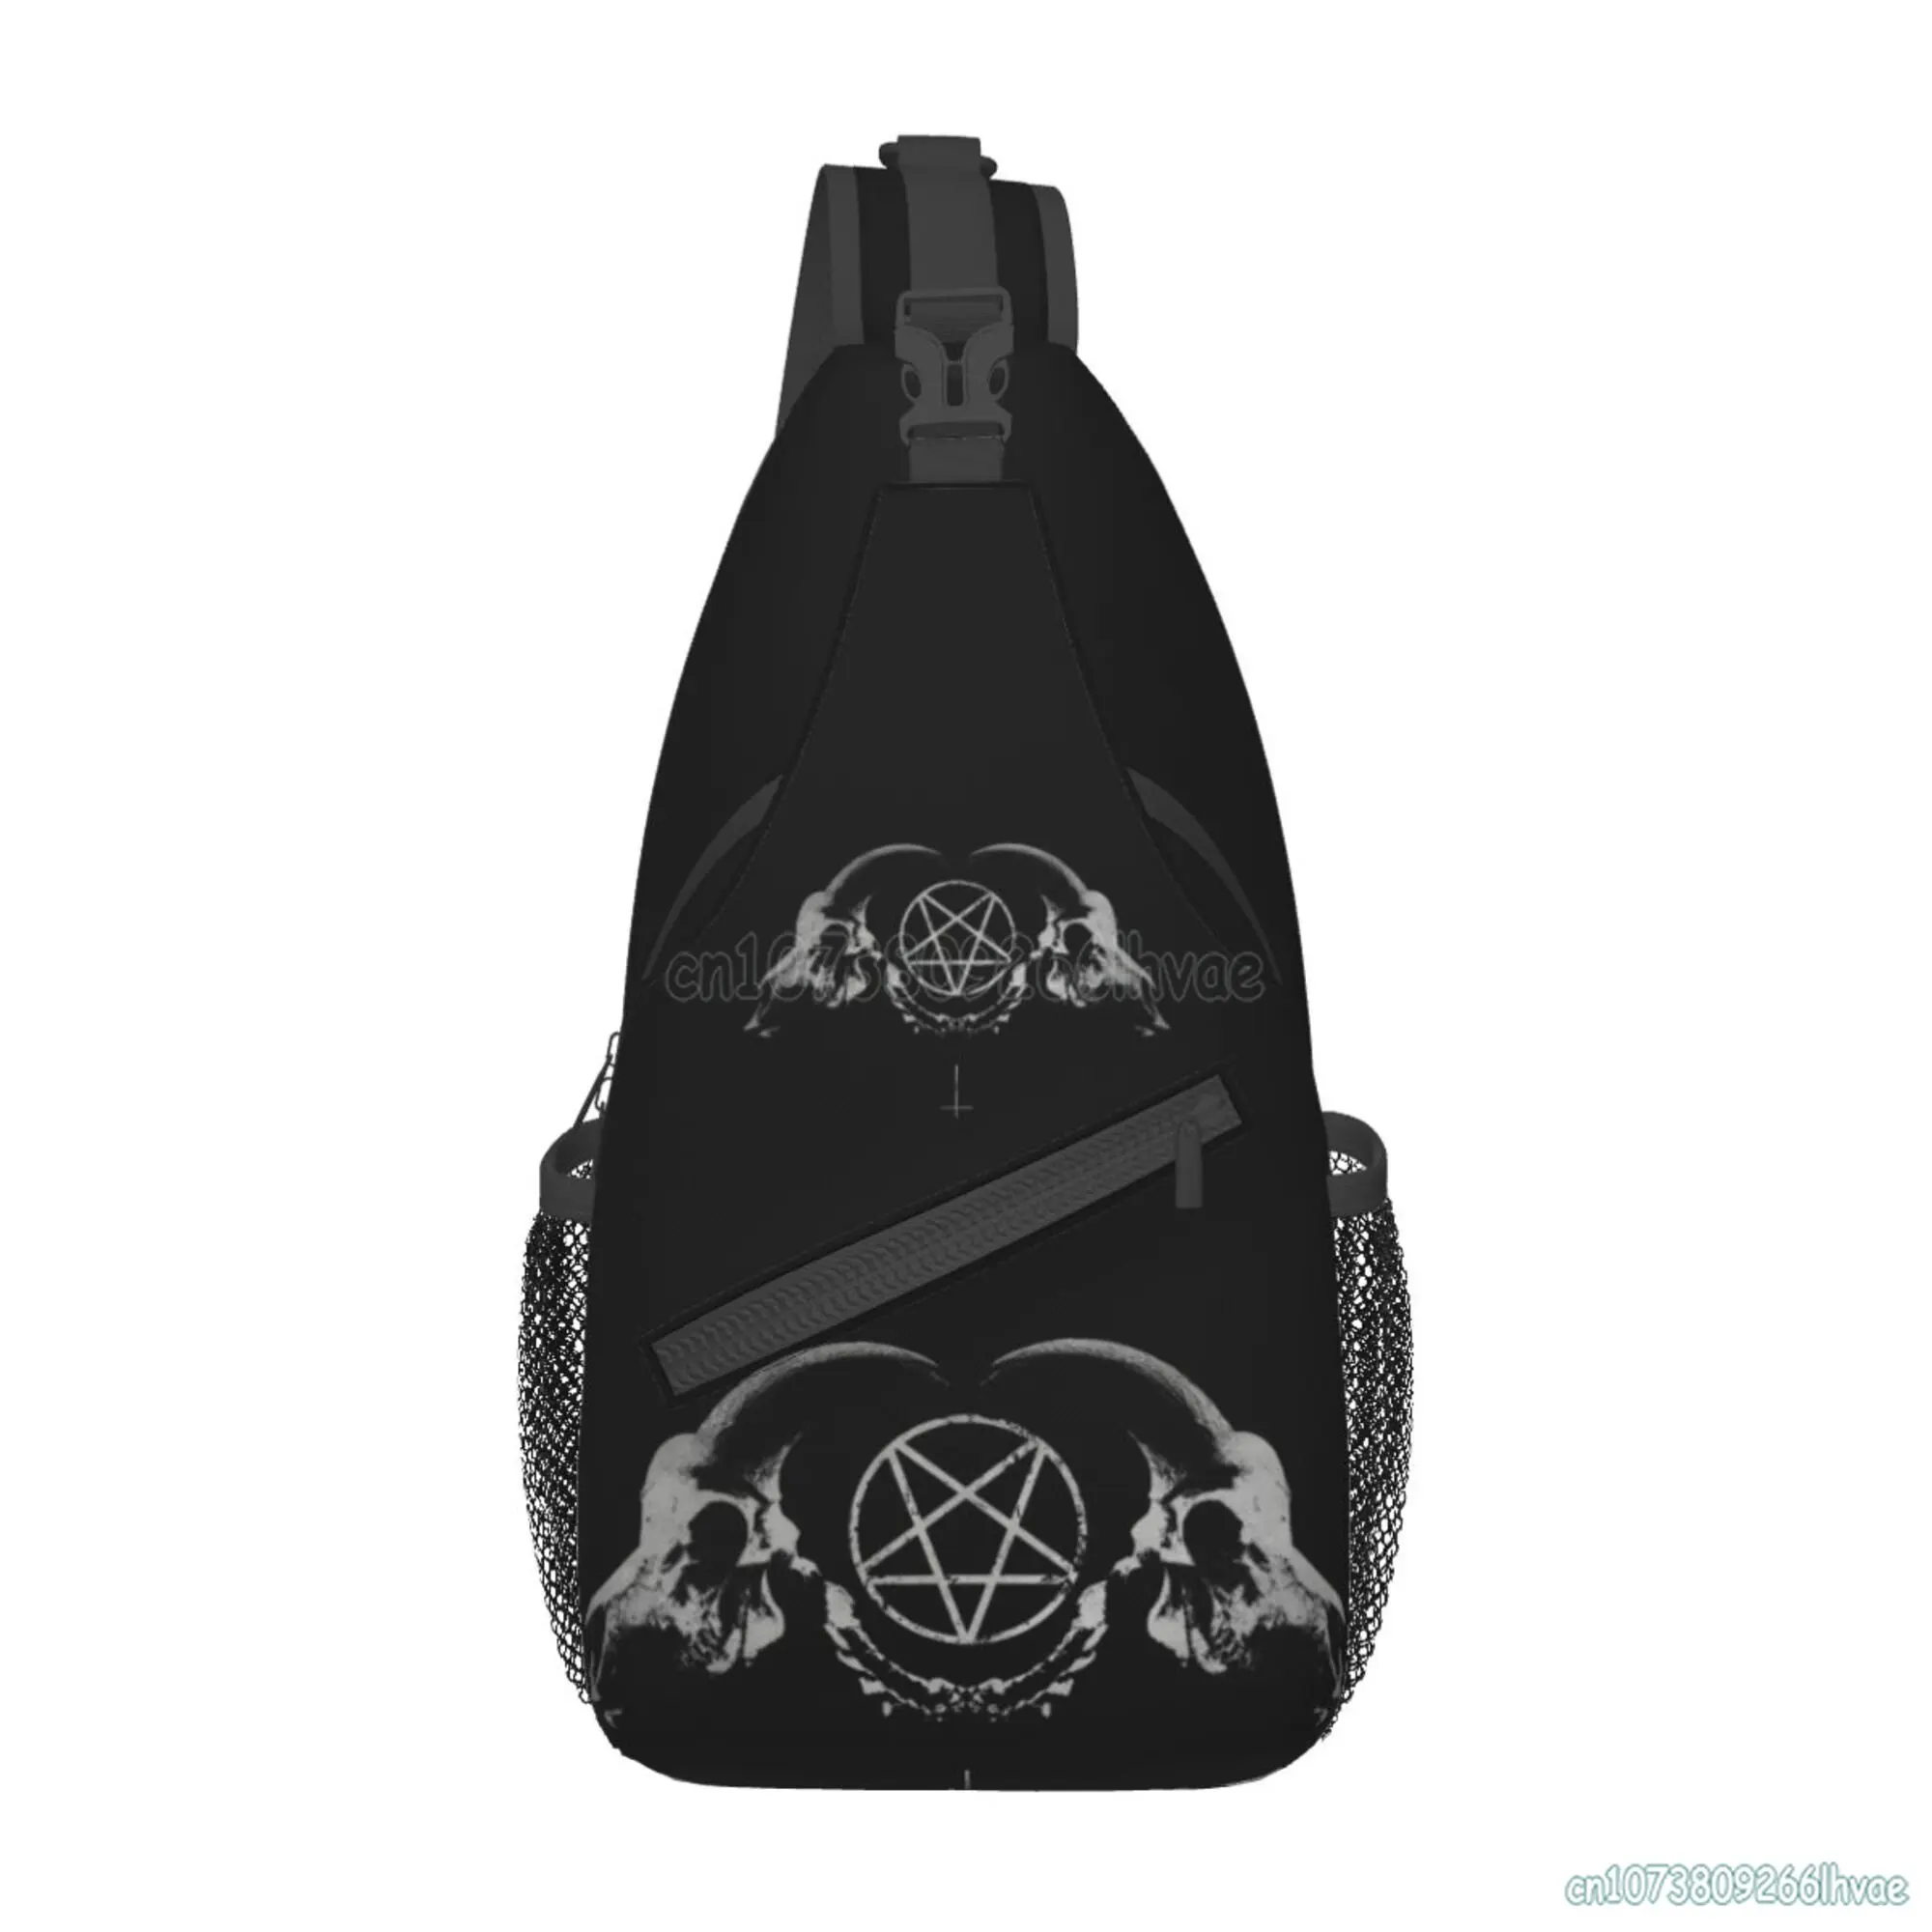 

Pentagram Satantic Occult Church of Satan Goat Goth Chest Bag Unisex Casual Sling Bag Crossbody Shoulder Backpack for Travel